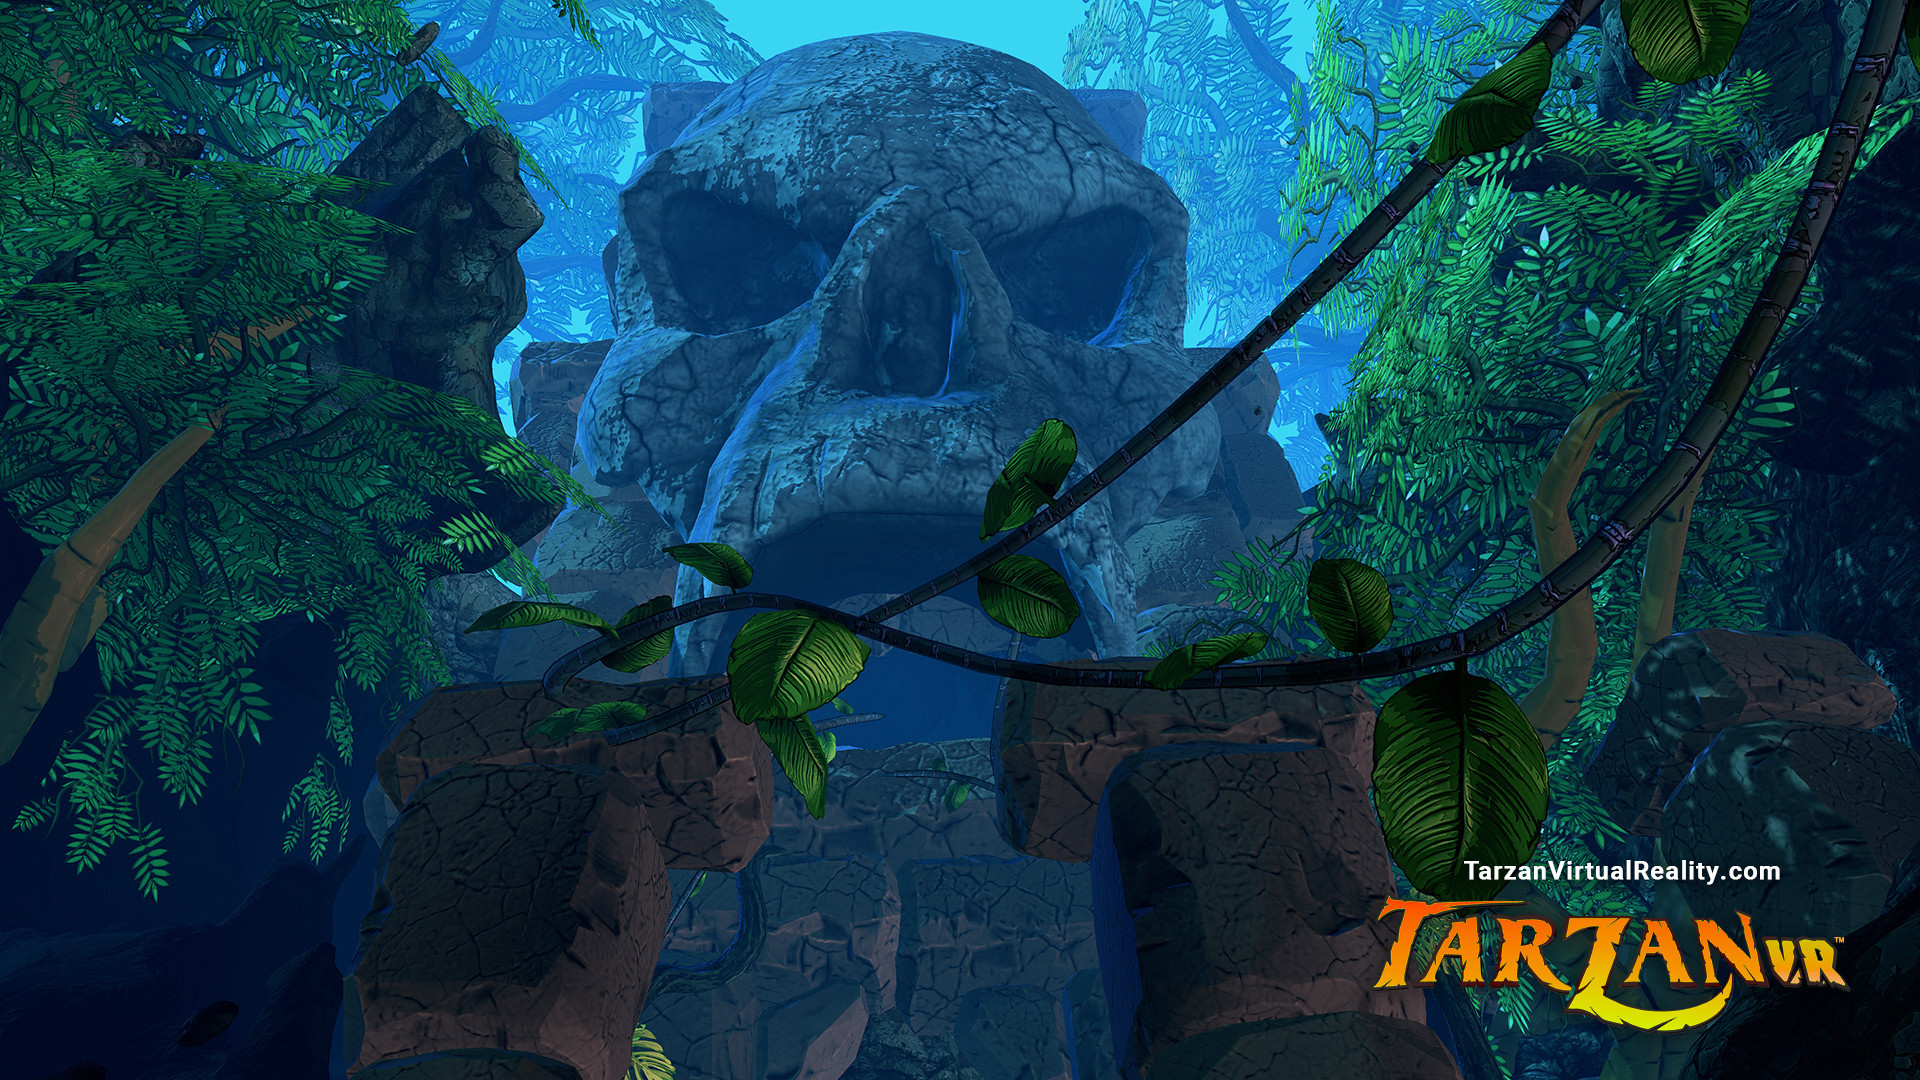 Tarzan VR  Issue #1 - "The Great Ape"